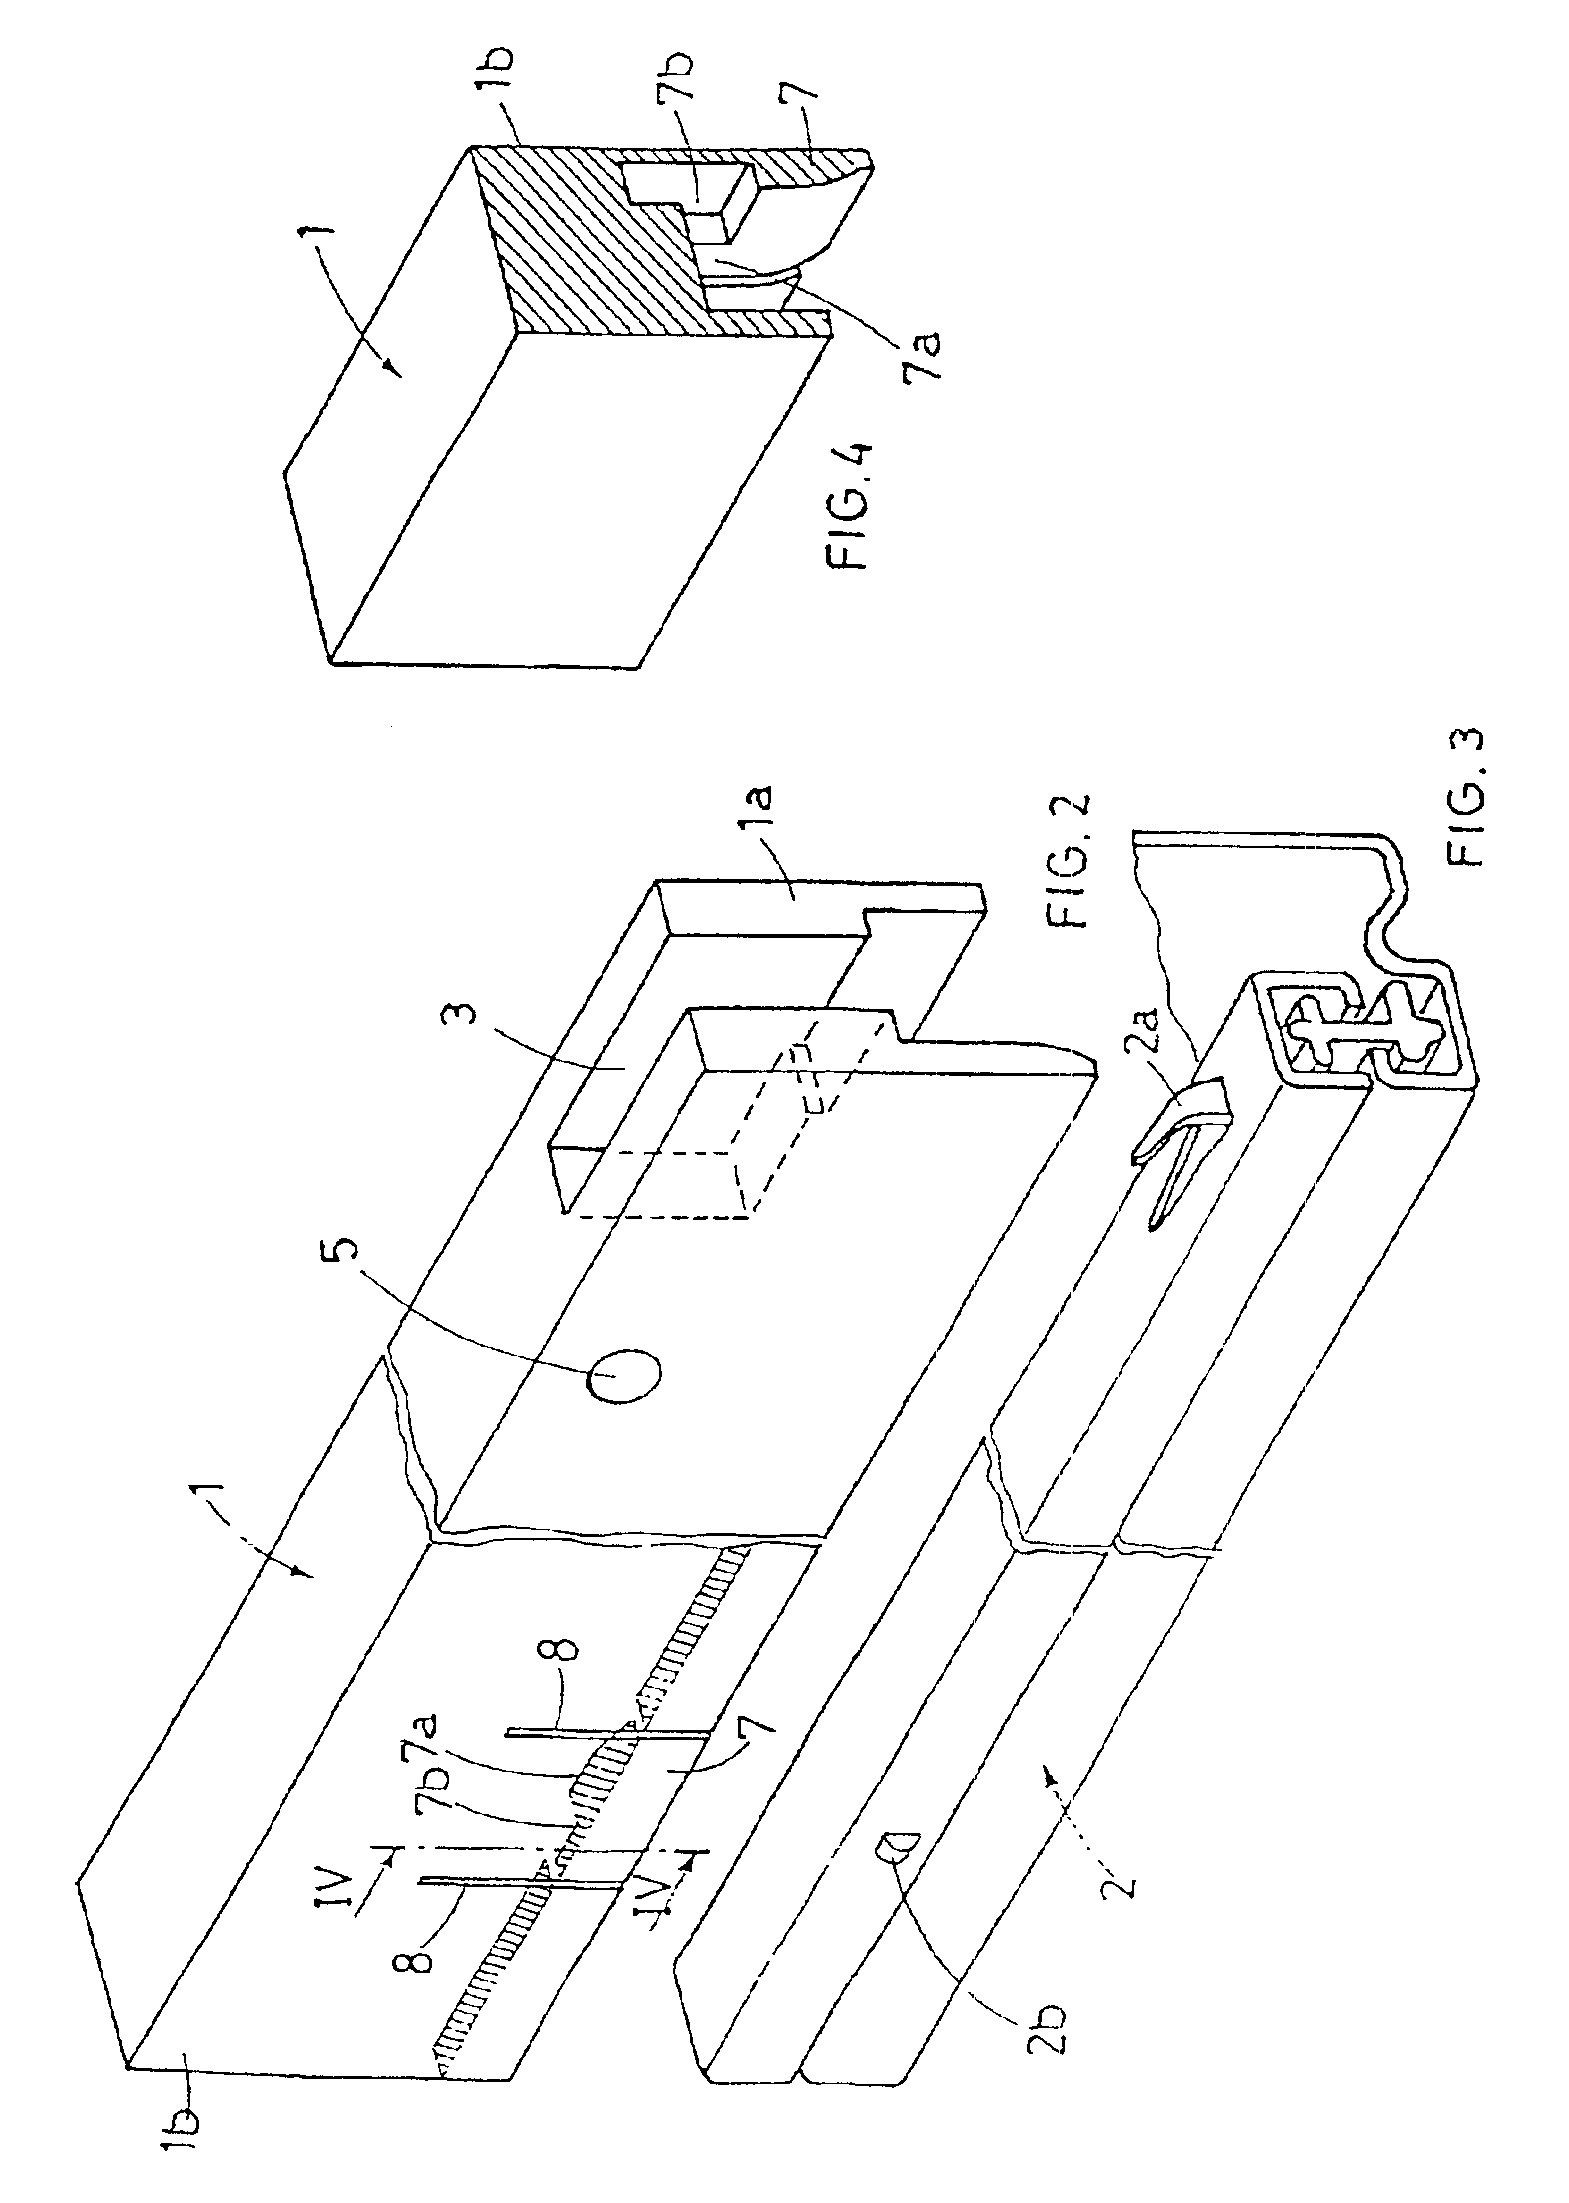 Multi-purpose element for sliding metal racks located inside furniture